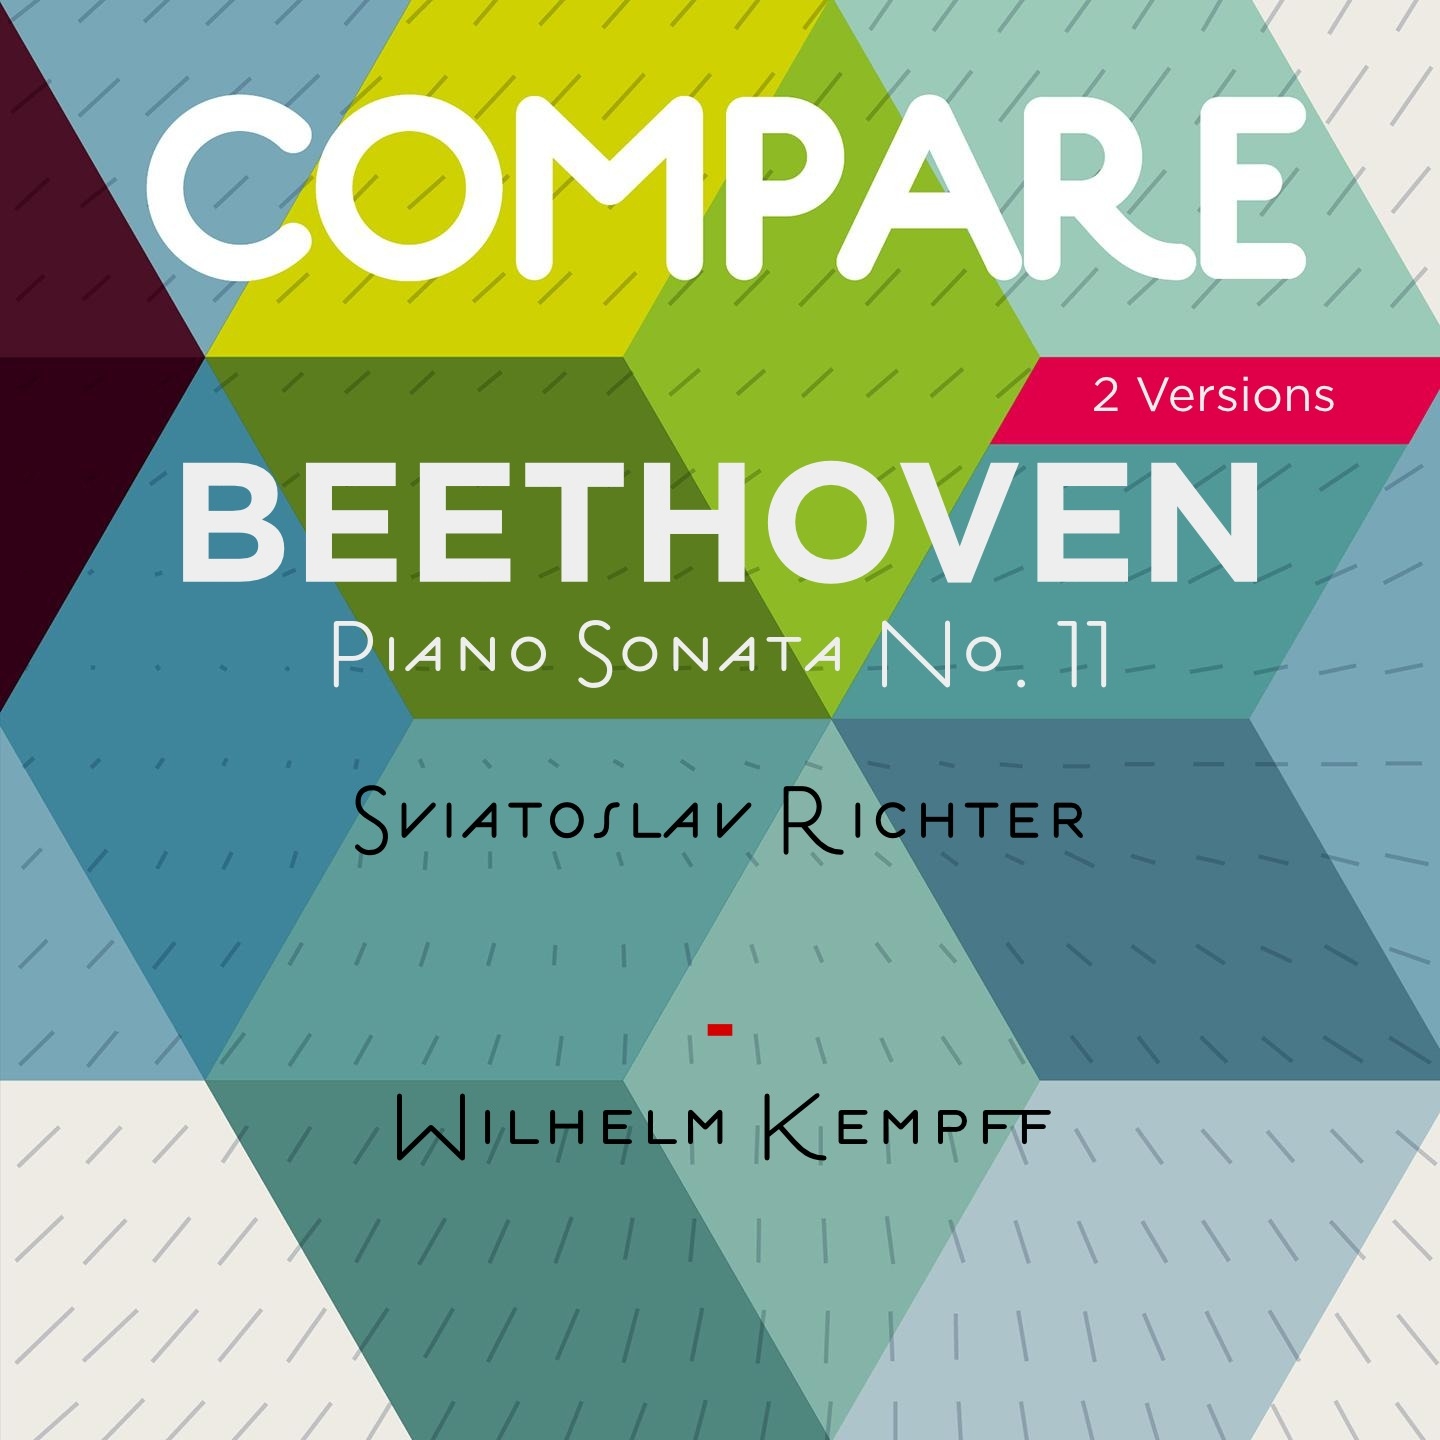 Beethoven: Piano Sonate No. 11, Sviatoslav Richter vs. Wilhelm Kempff